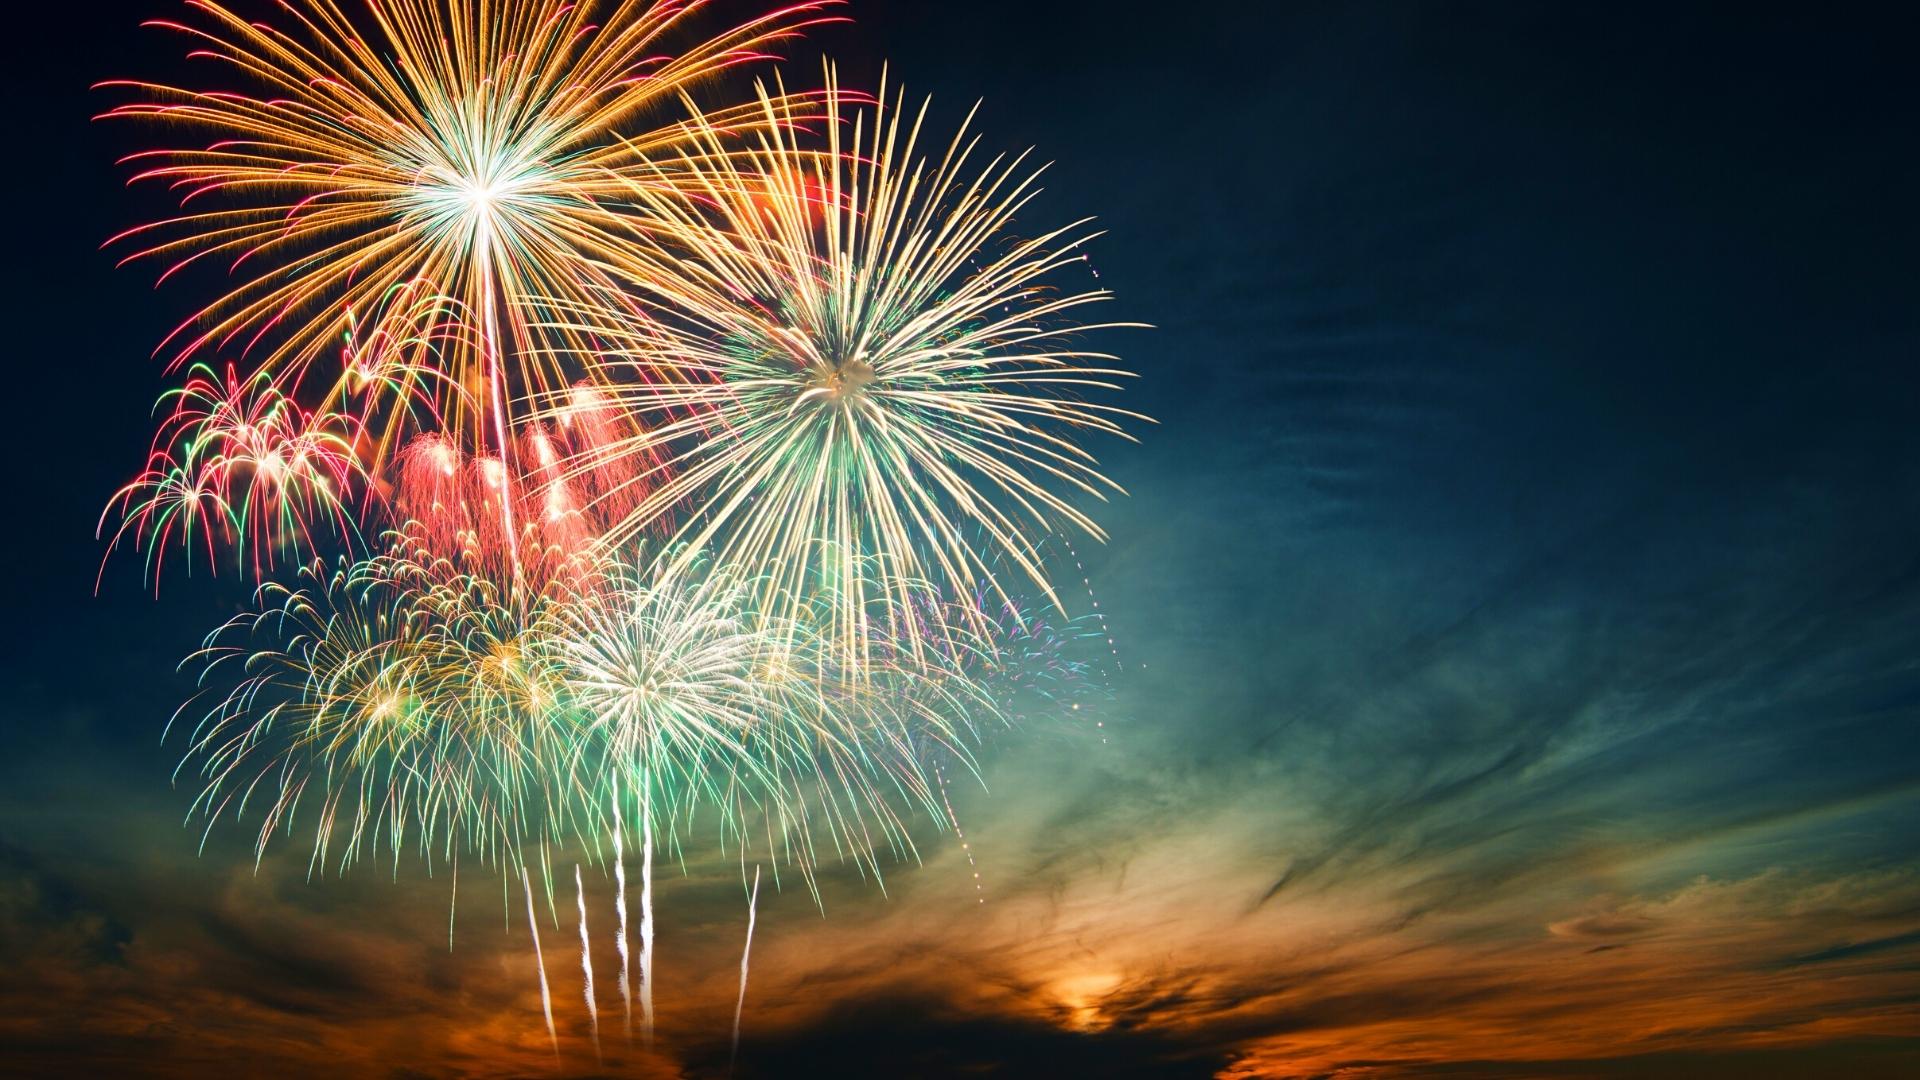 Oak Island Fireworks and Fourth of July Festival